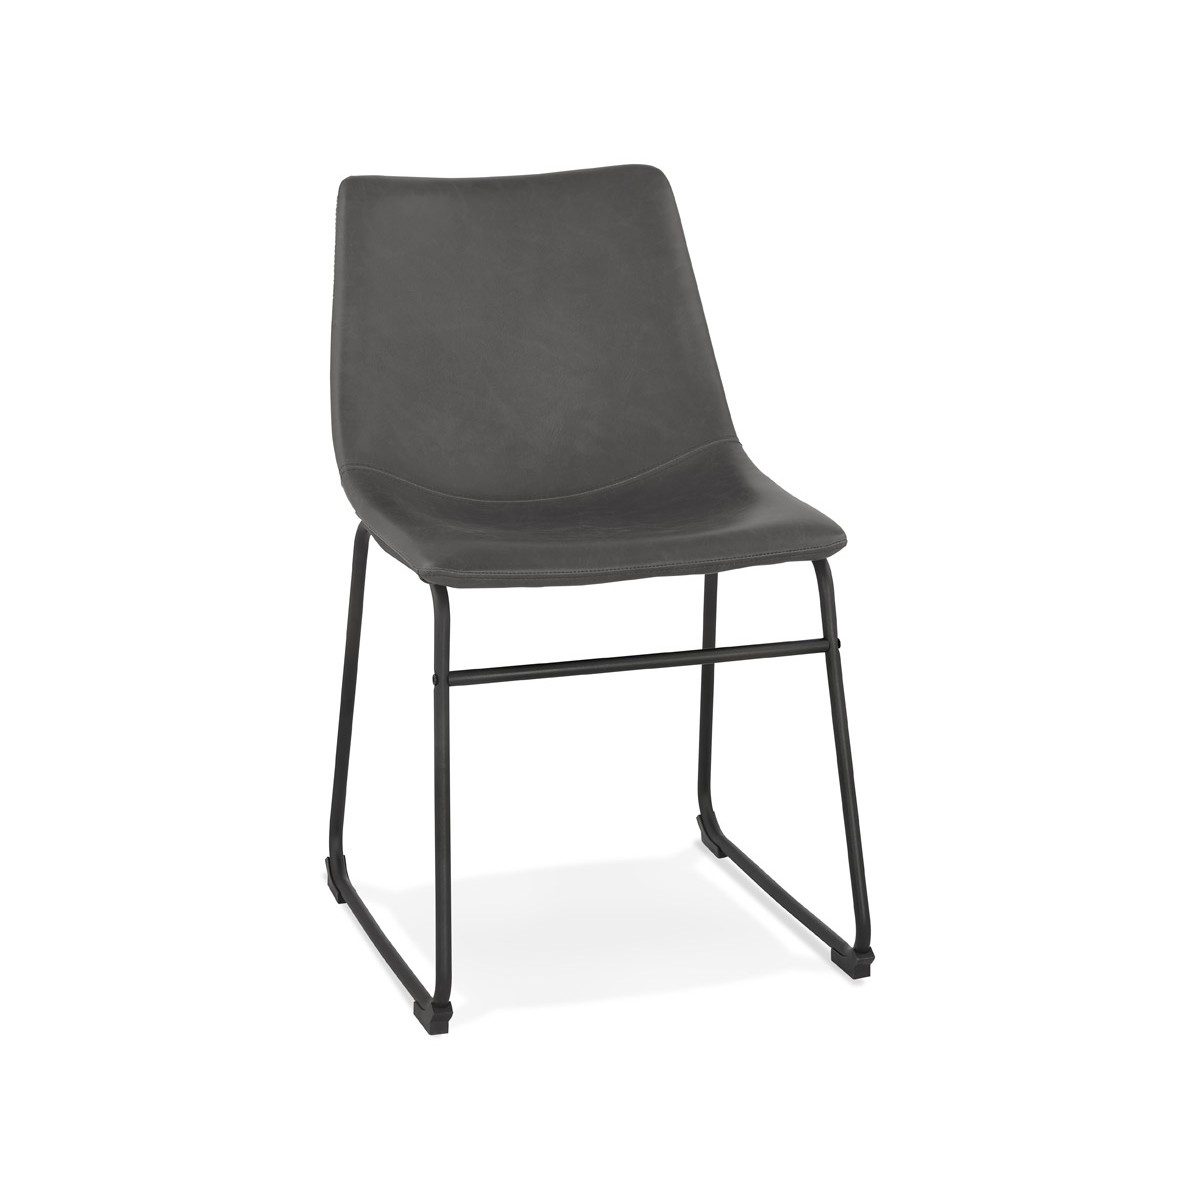 Vintage Stuhl und industrielle schwarze Metallfüße JOE (dunkelgrau) - AMP  Story 6867